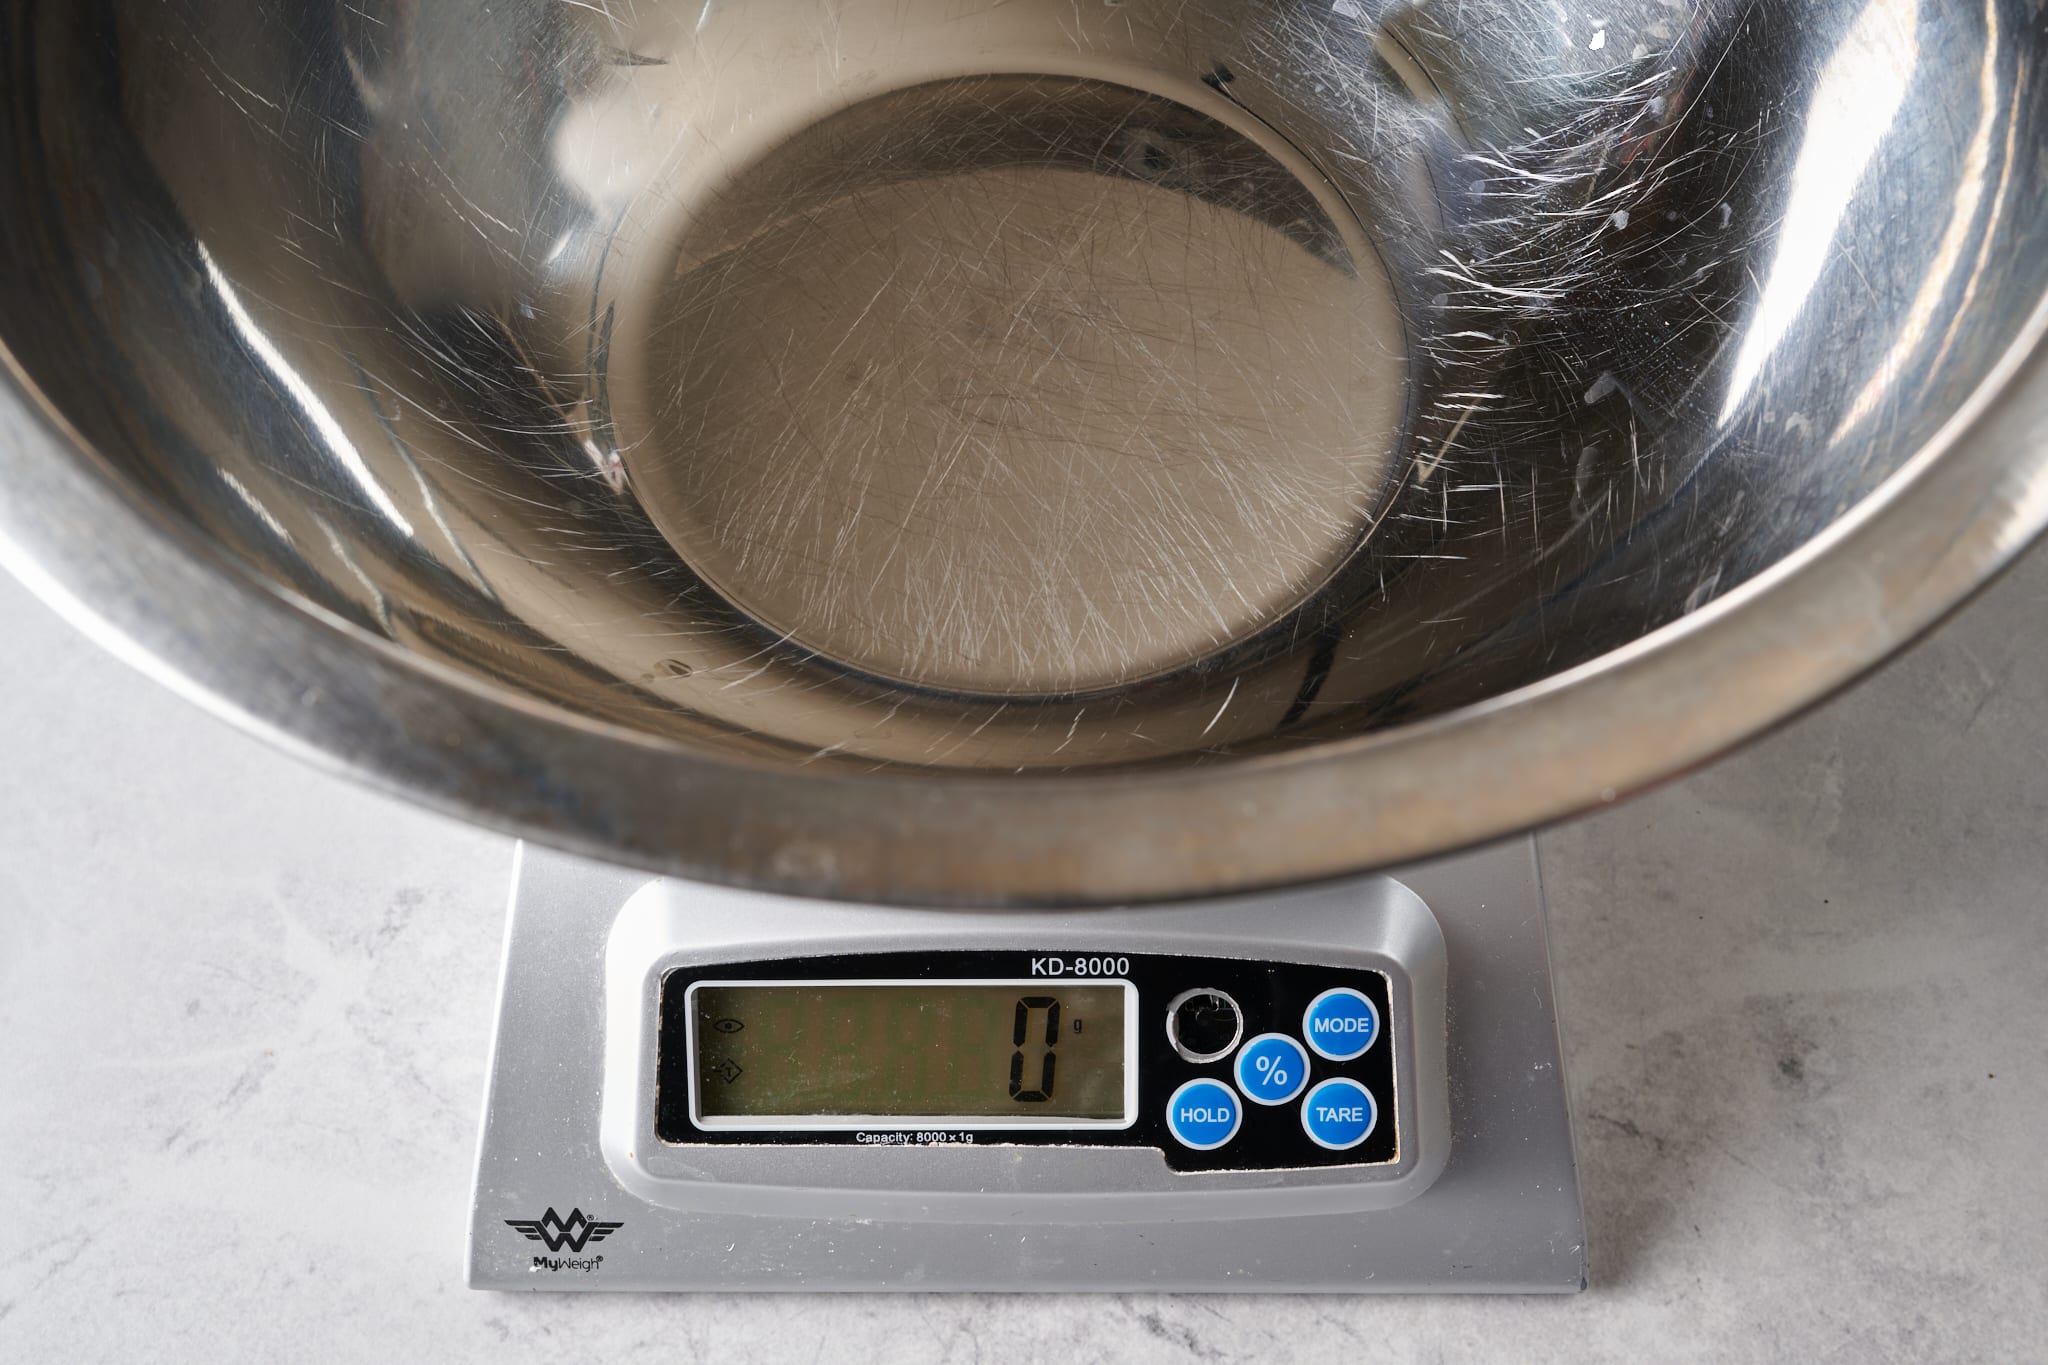 Kitchen Scale for sourdough baking